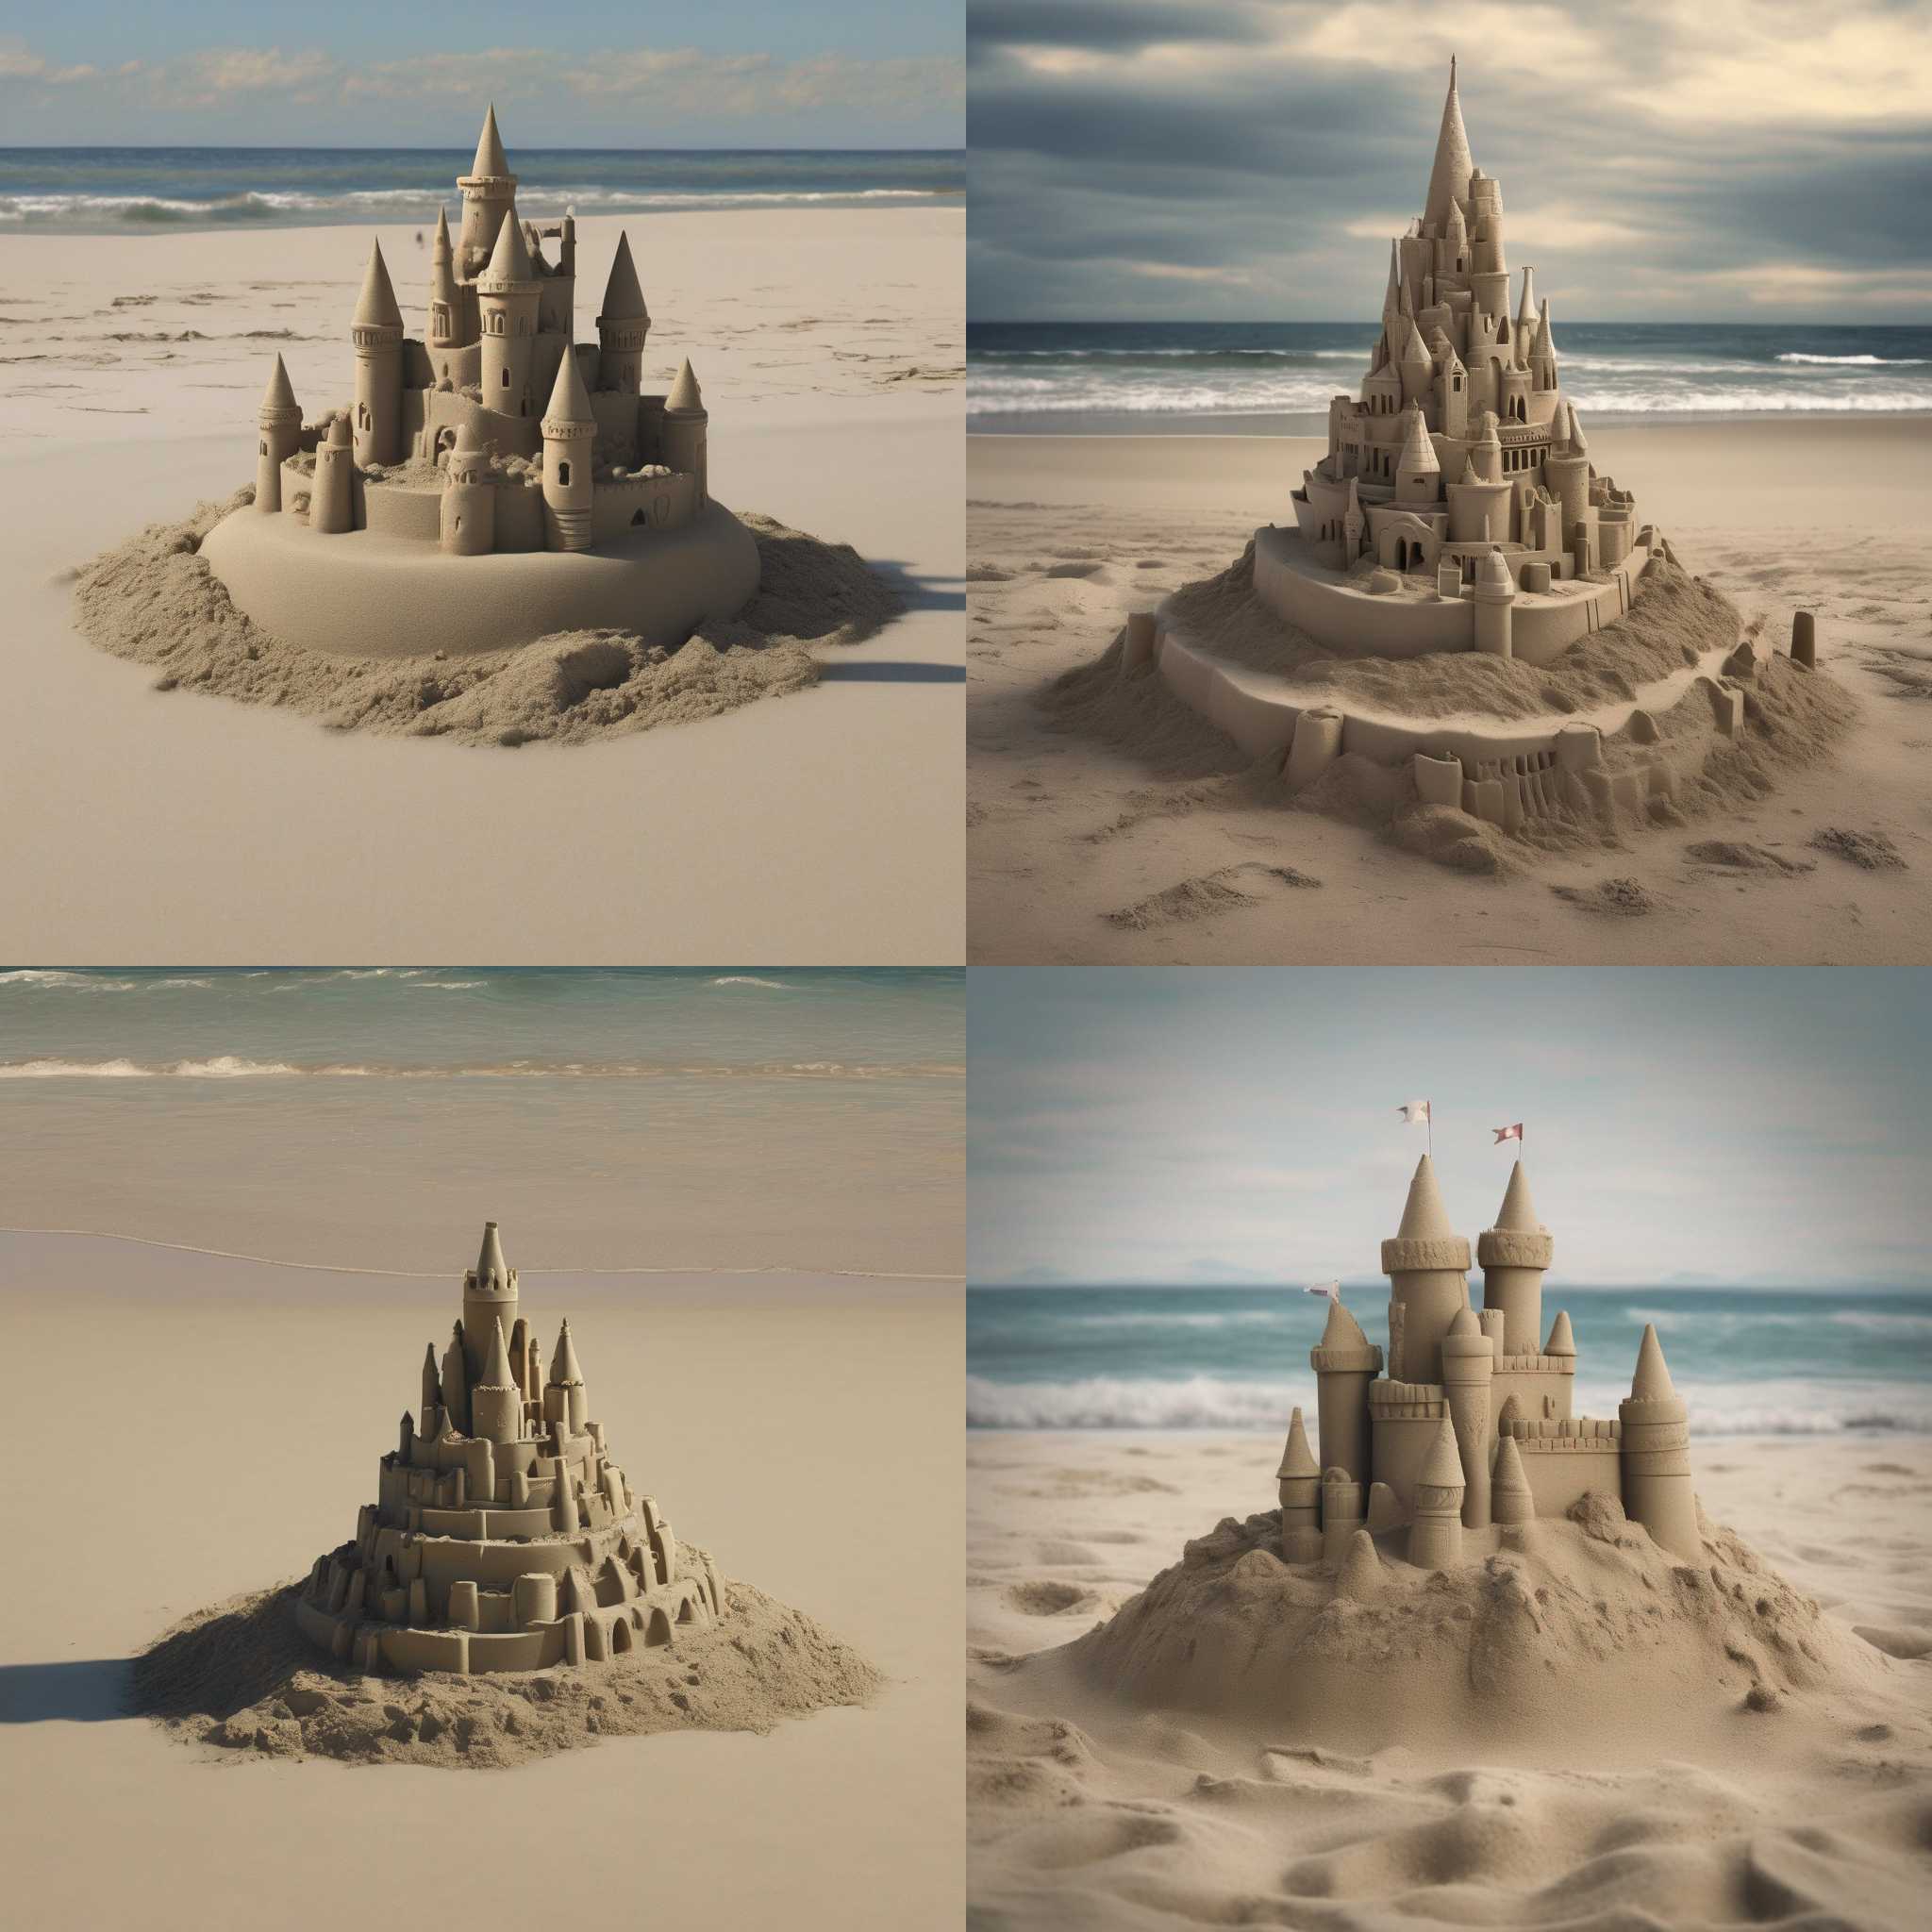 A sandcastle